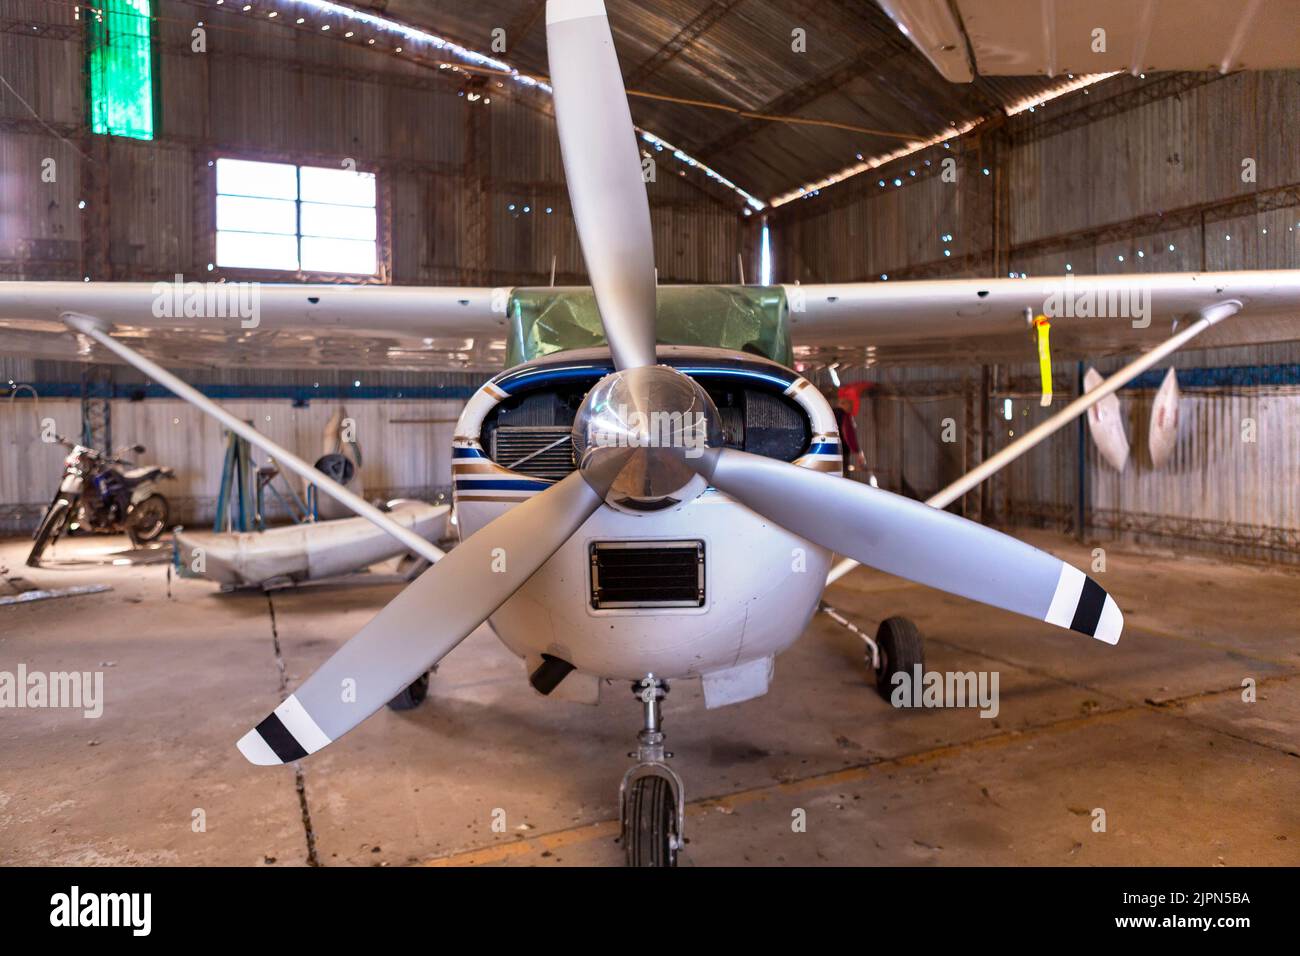 plane frontal inside the hangar Stock Photo